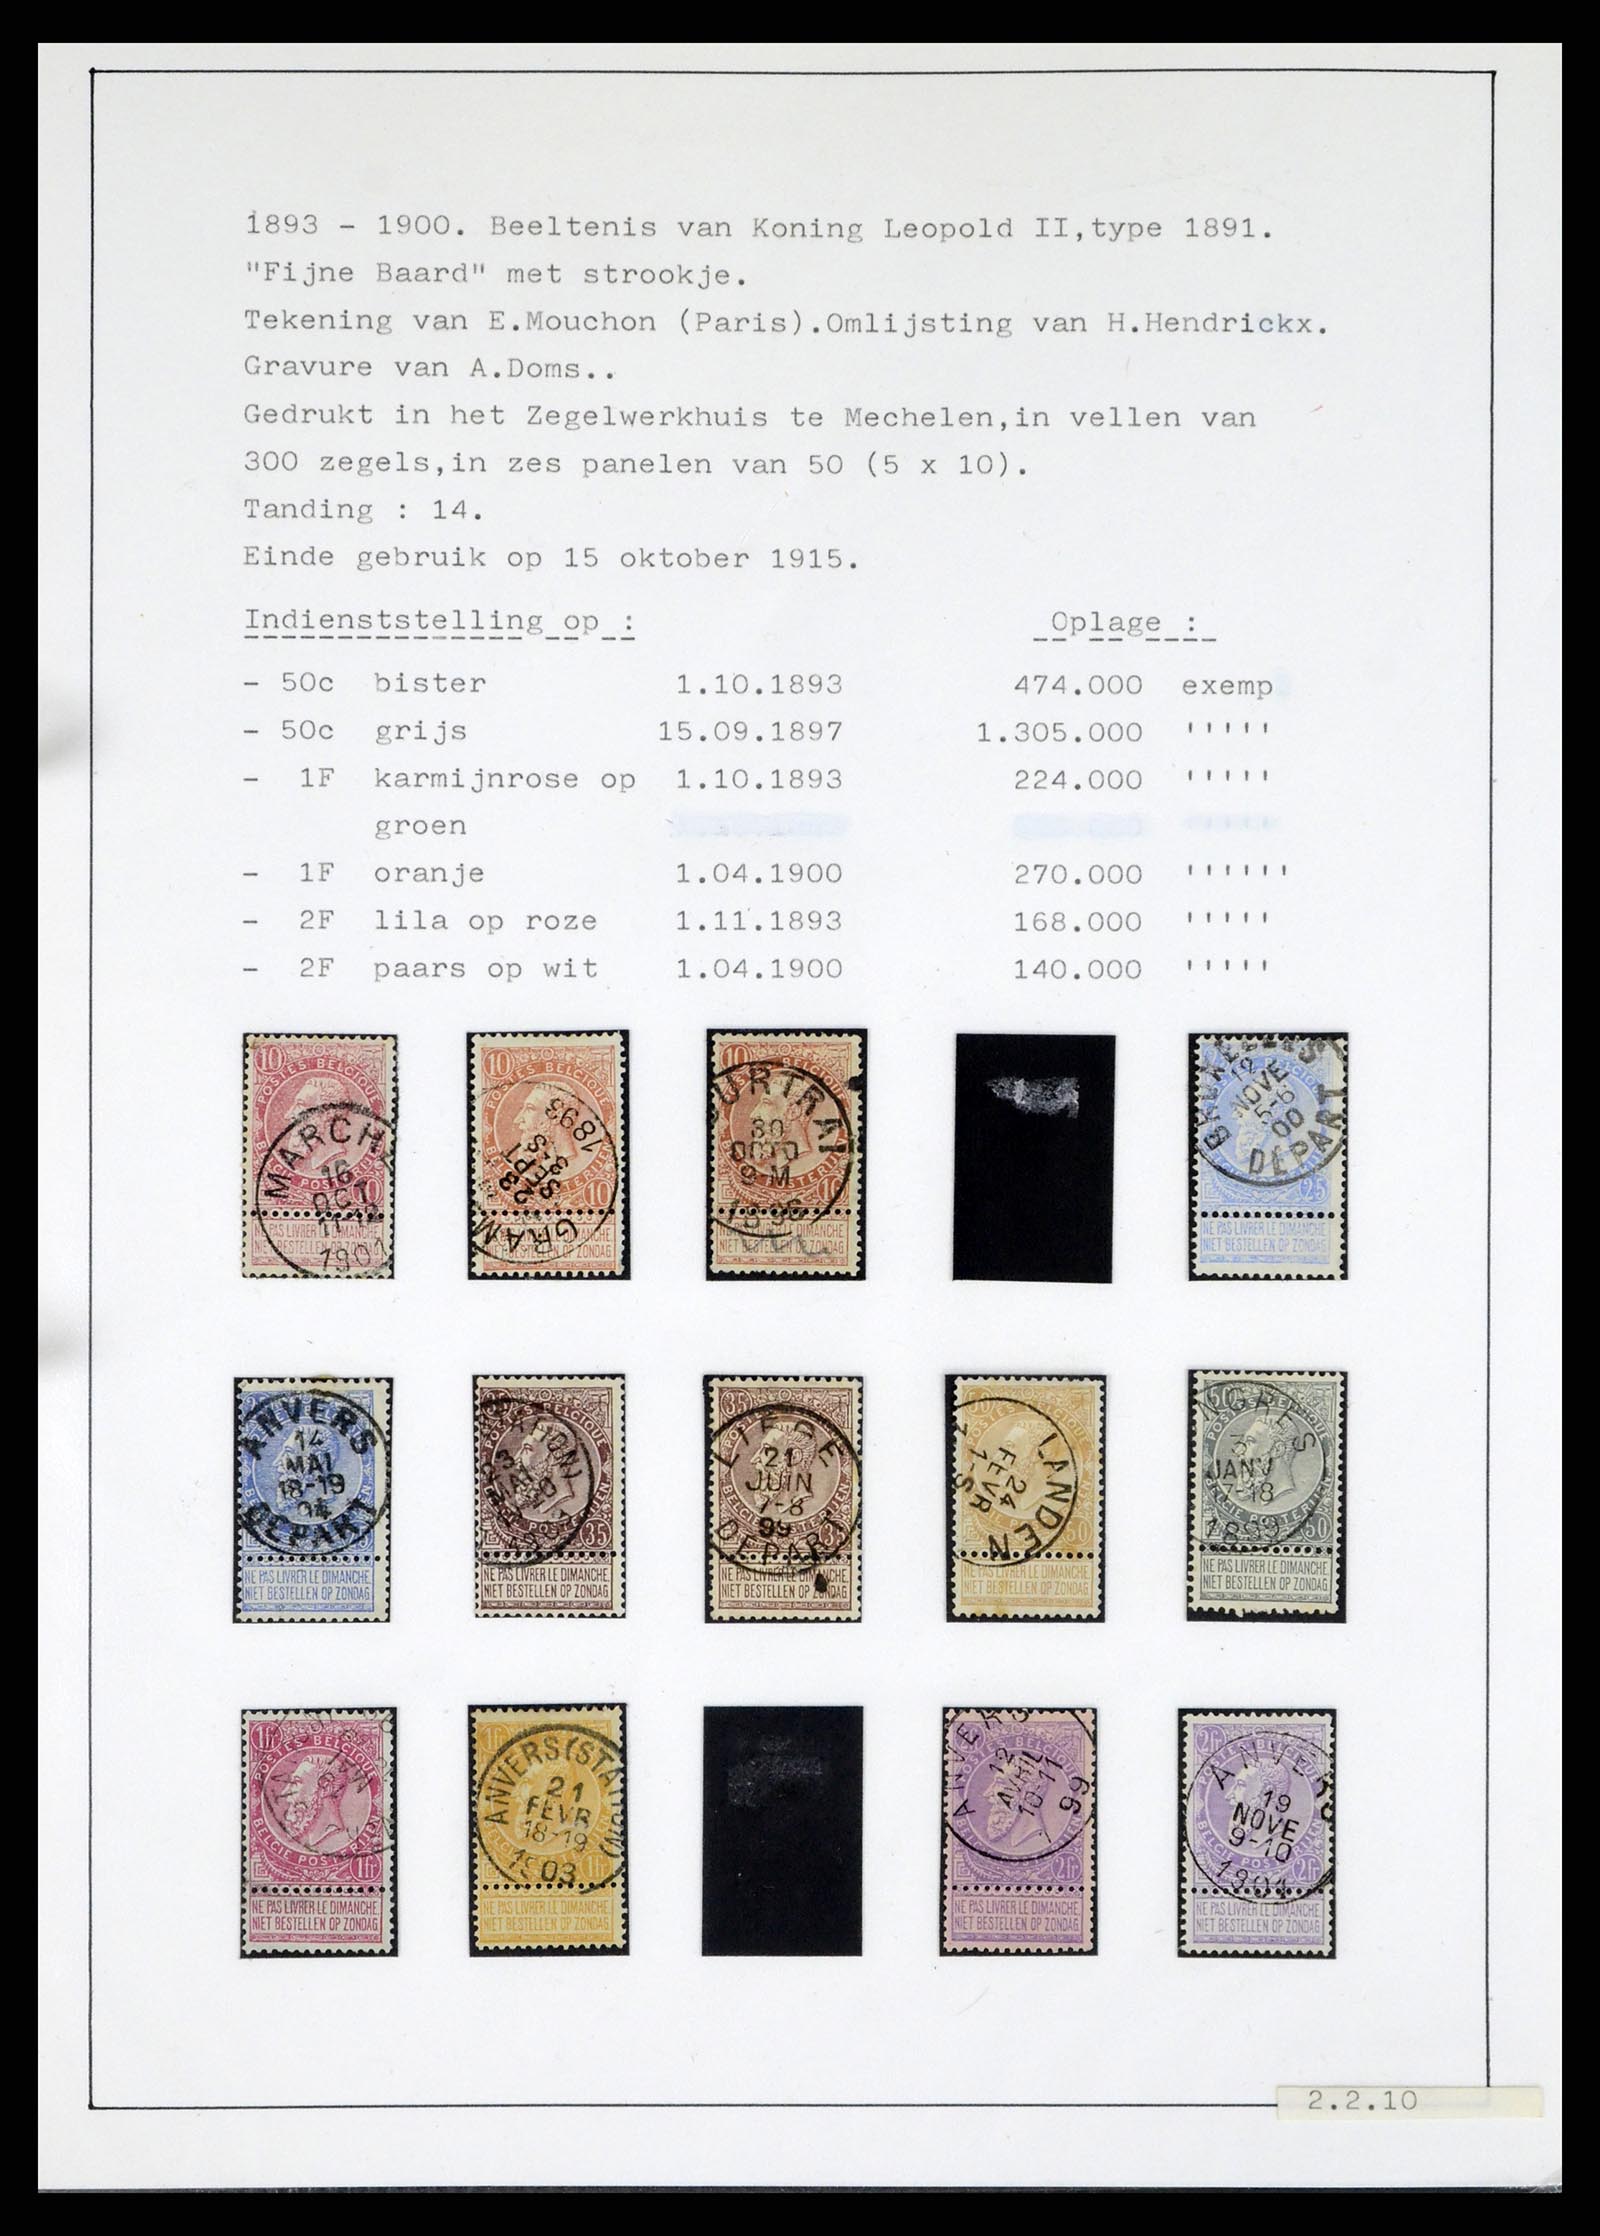 38033 0025 - Stamp collection 38033 Belgiùm classic 1849-1905.